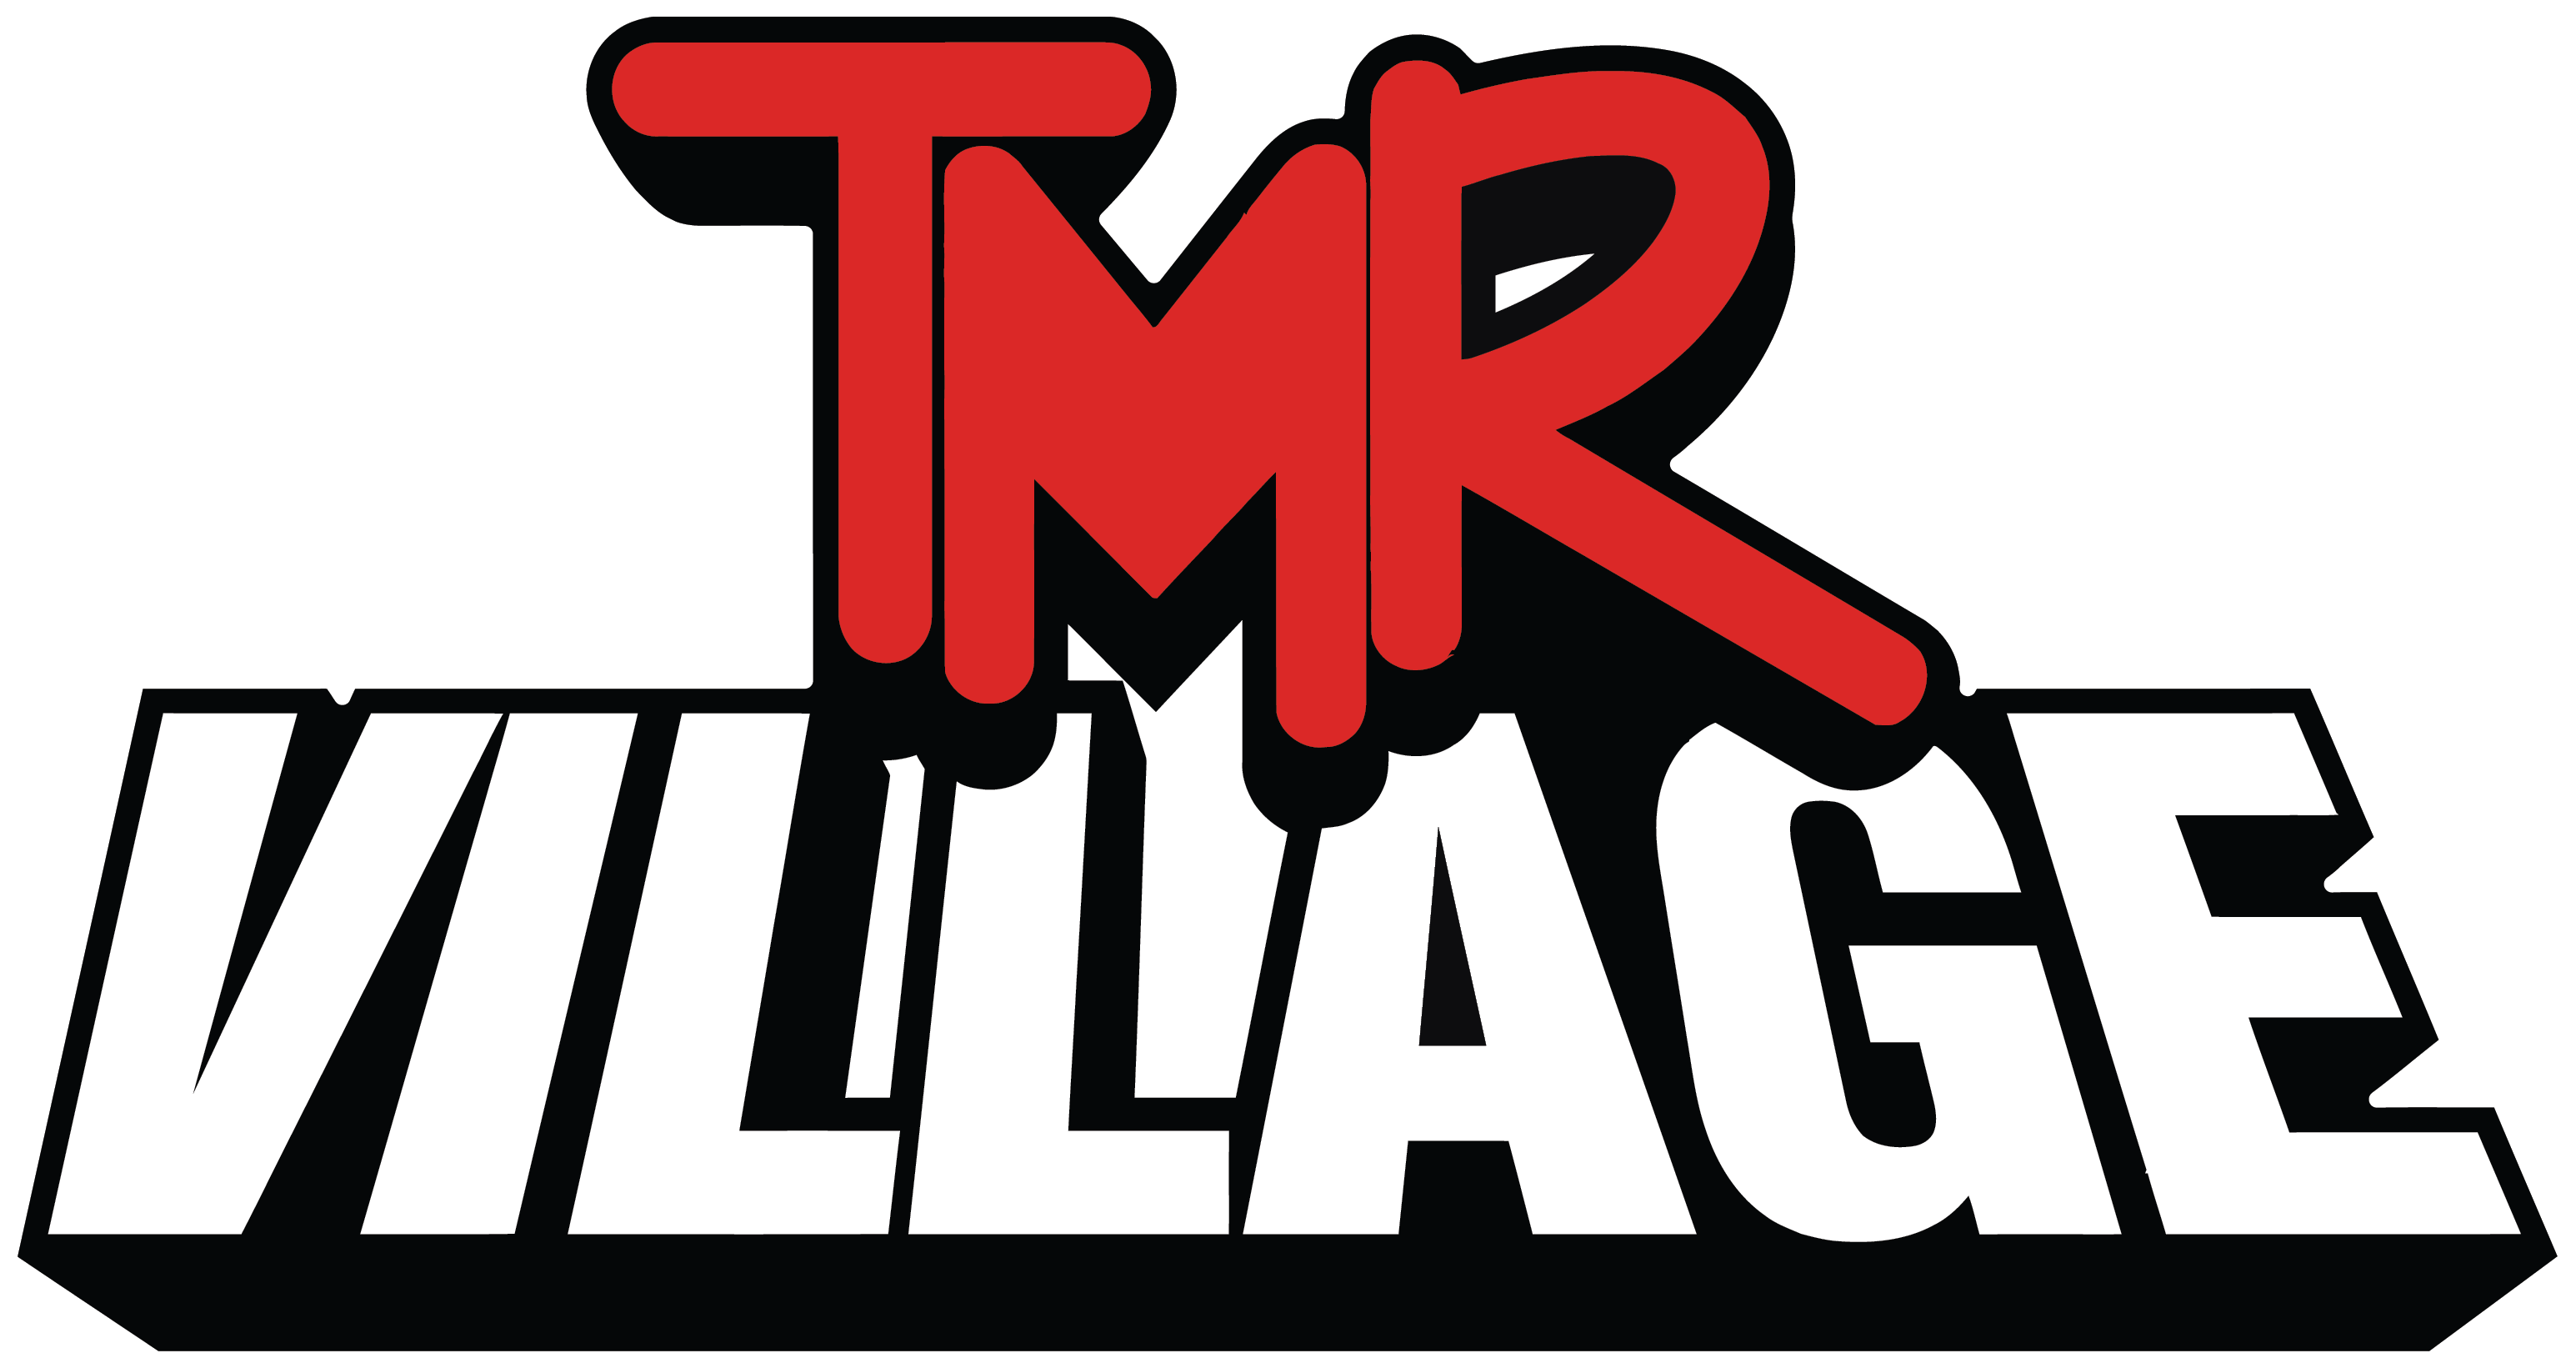 TMR VILLAGE - TUTTO MOTO RACING